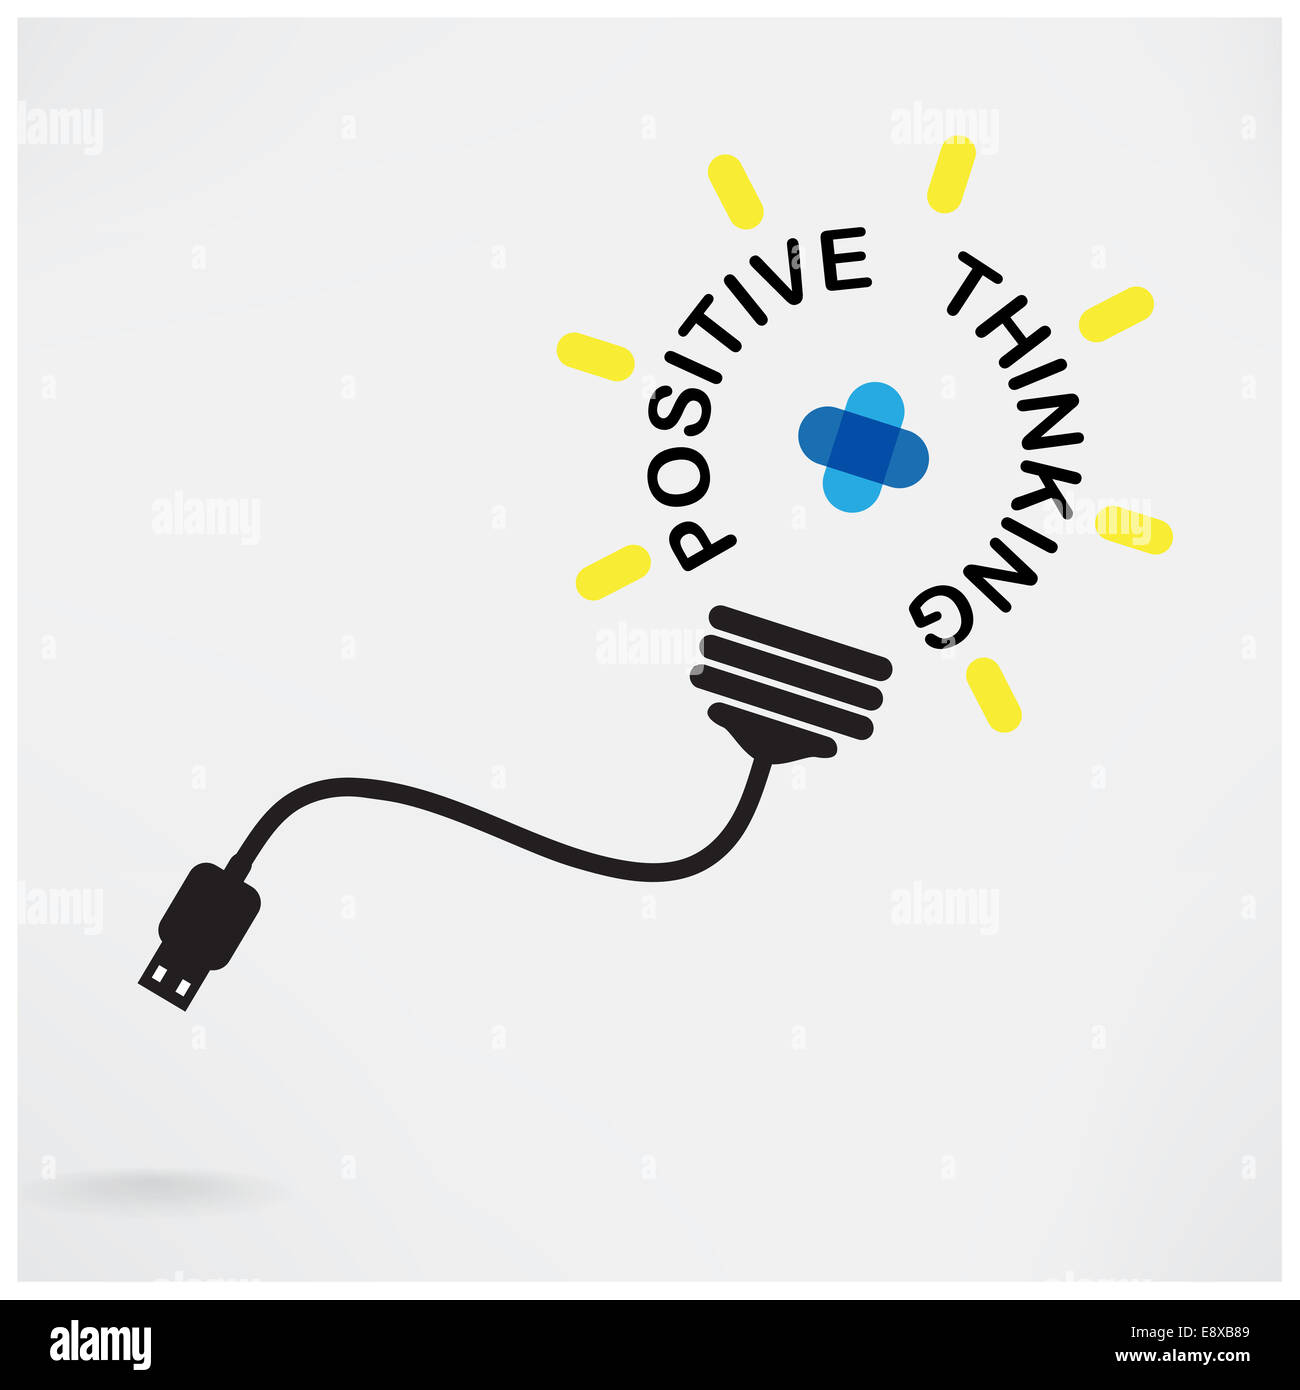 Creative light bulb idea ,business idea ,abstract symbol,positive thinking concept ,education concept. Stock Photo